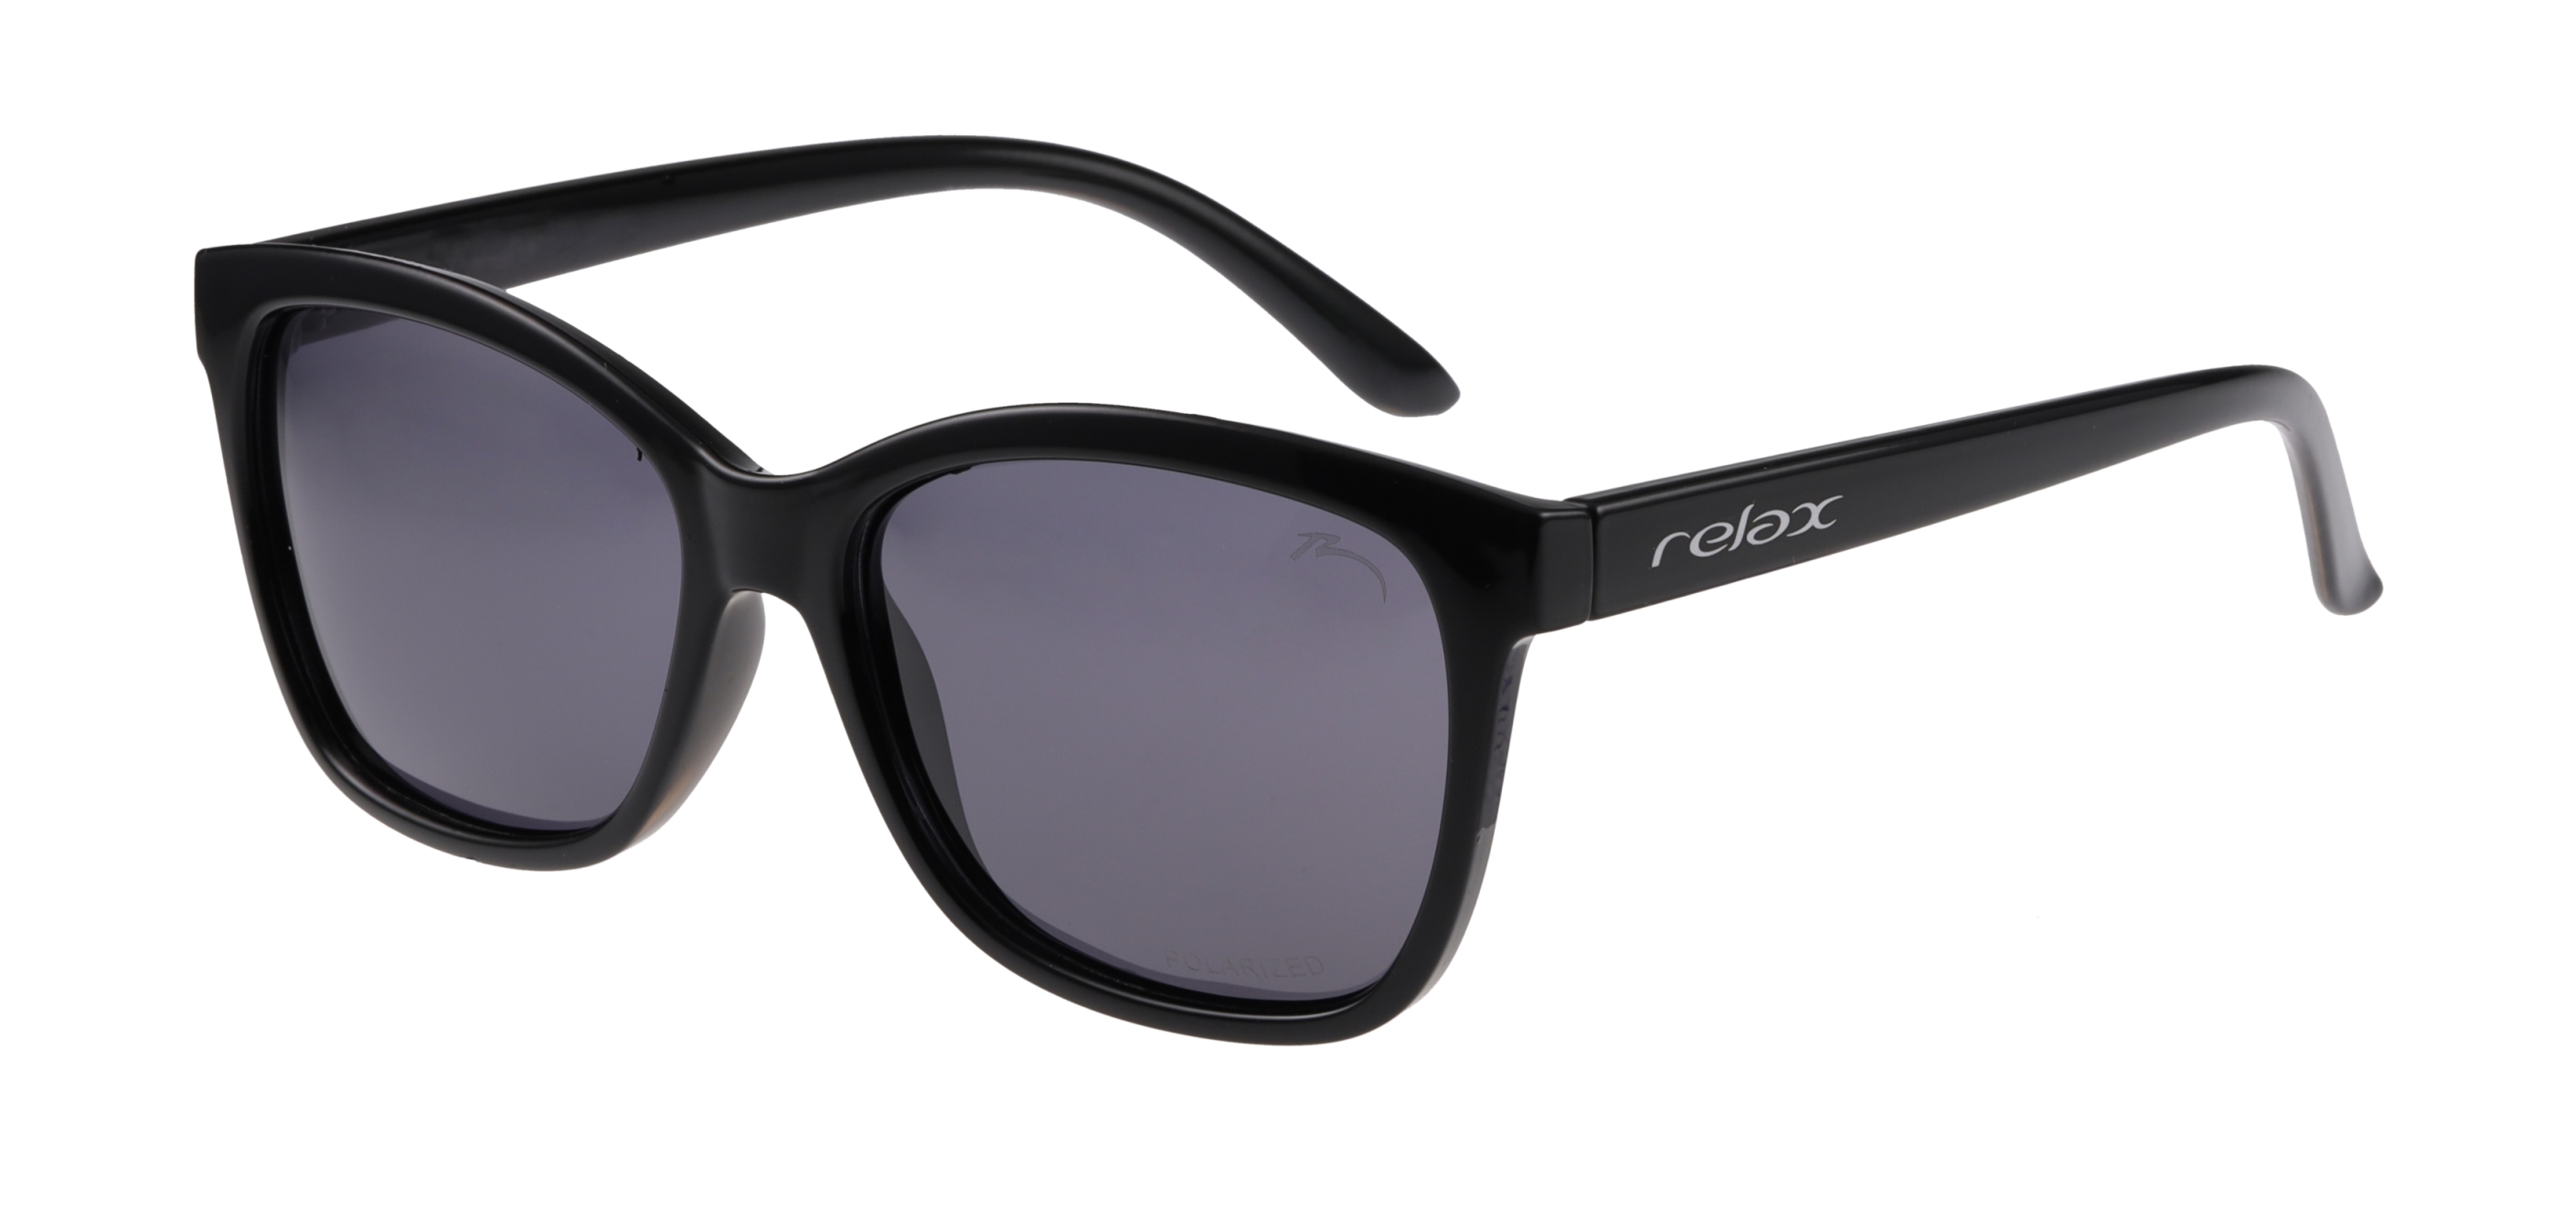 Kids Polarized sunglasses  Relax Frigo R3090A standard